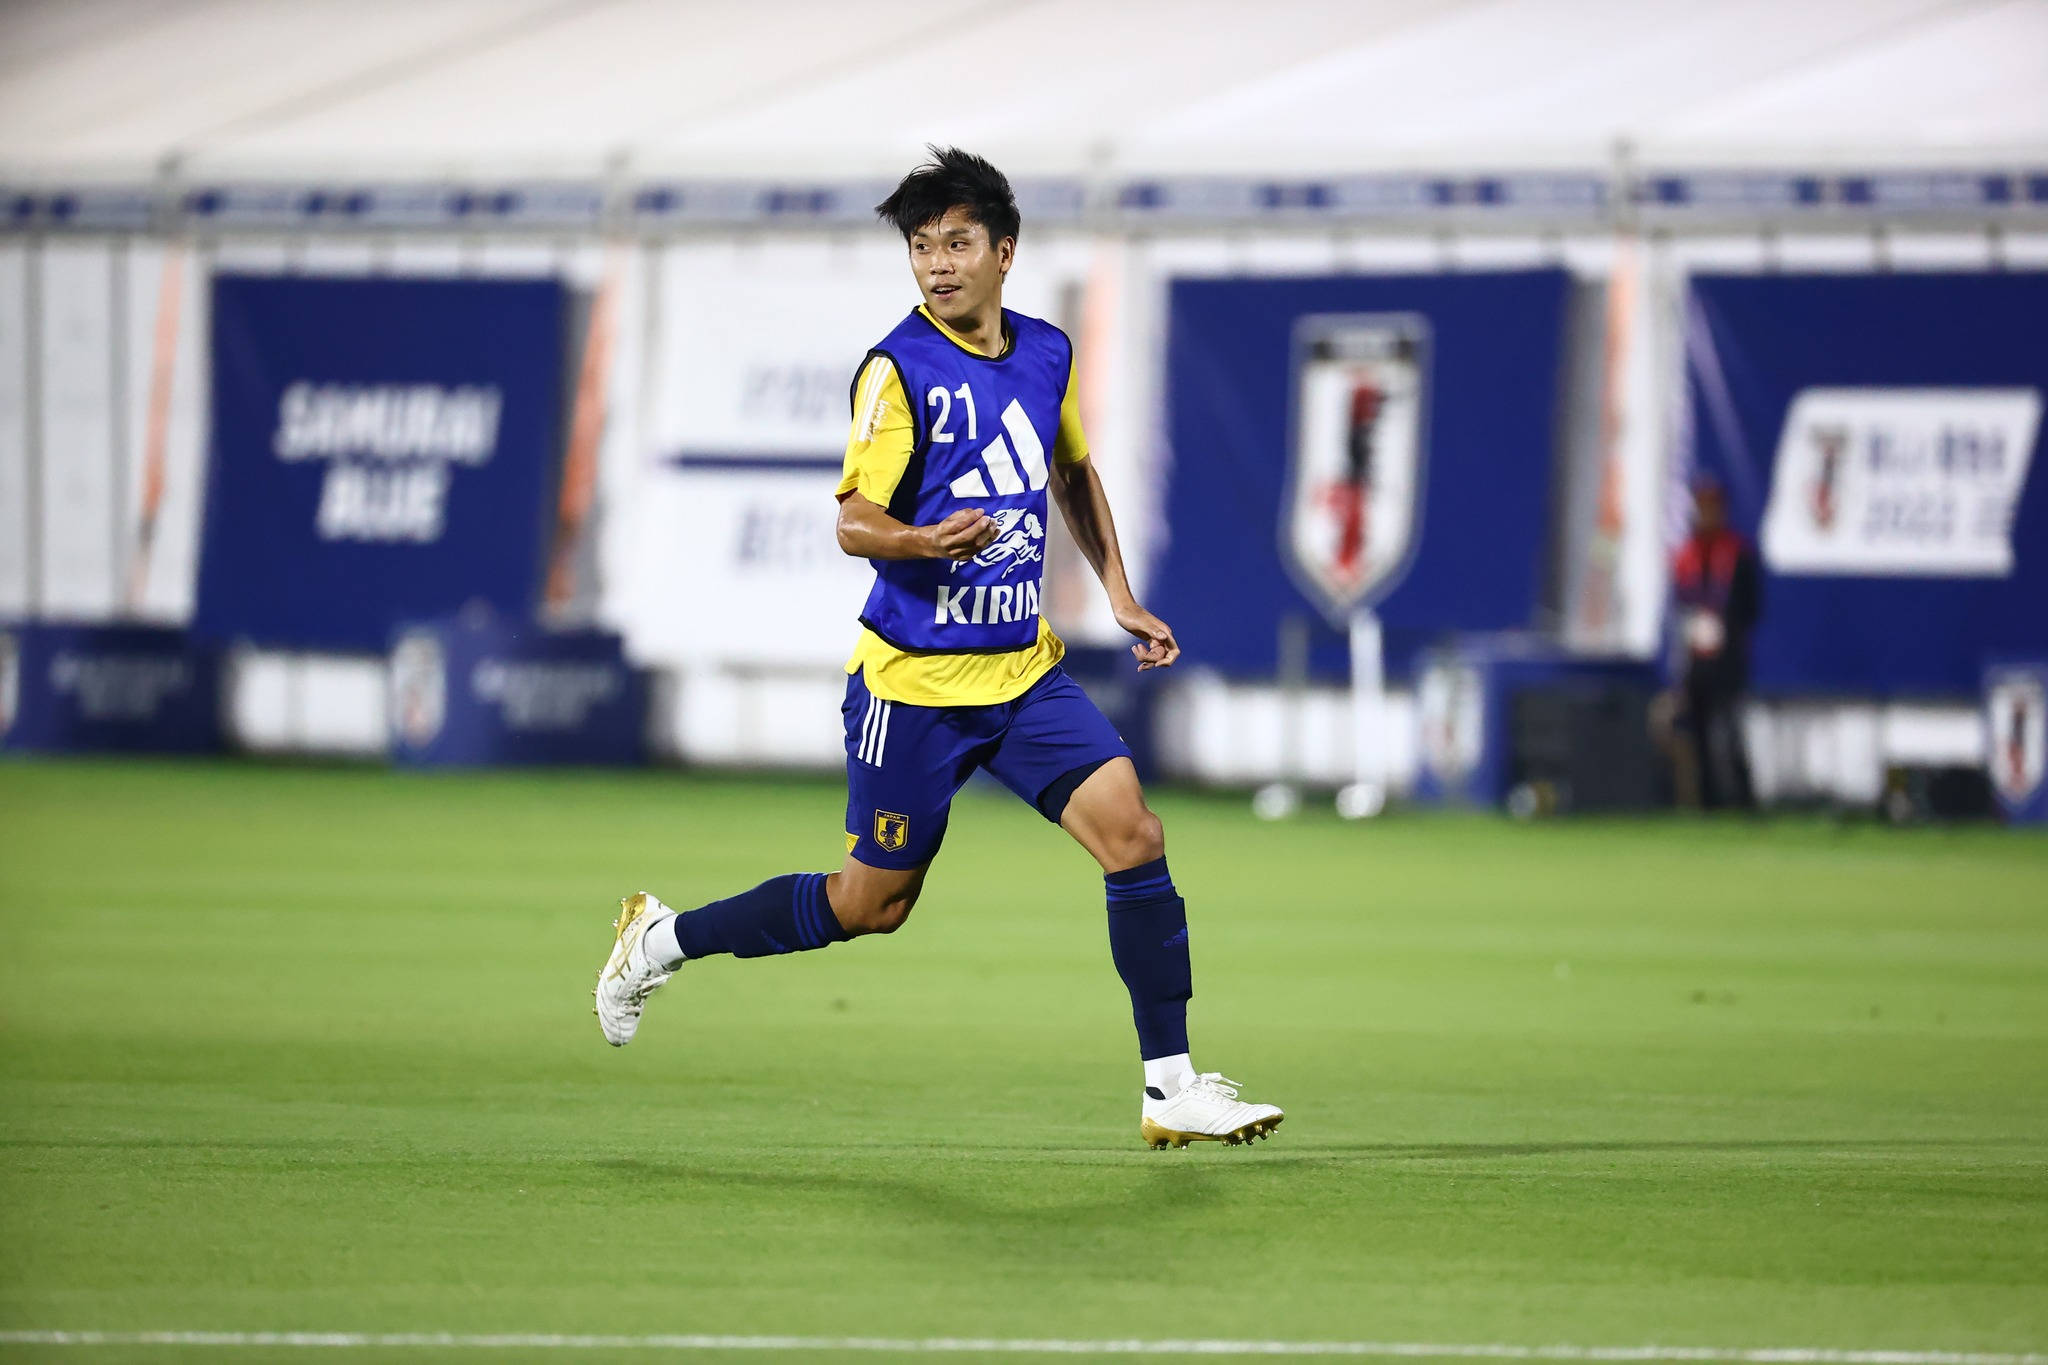 Download Japan National Football Team Forward Ueda Wallpaper | Wallpapers .com